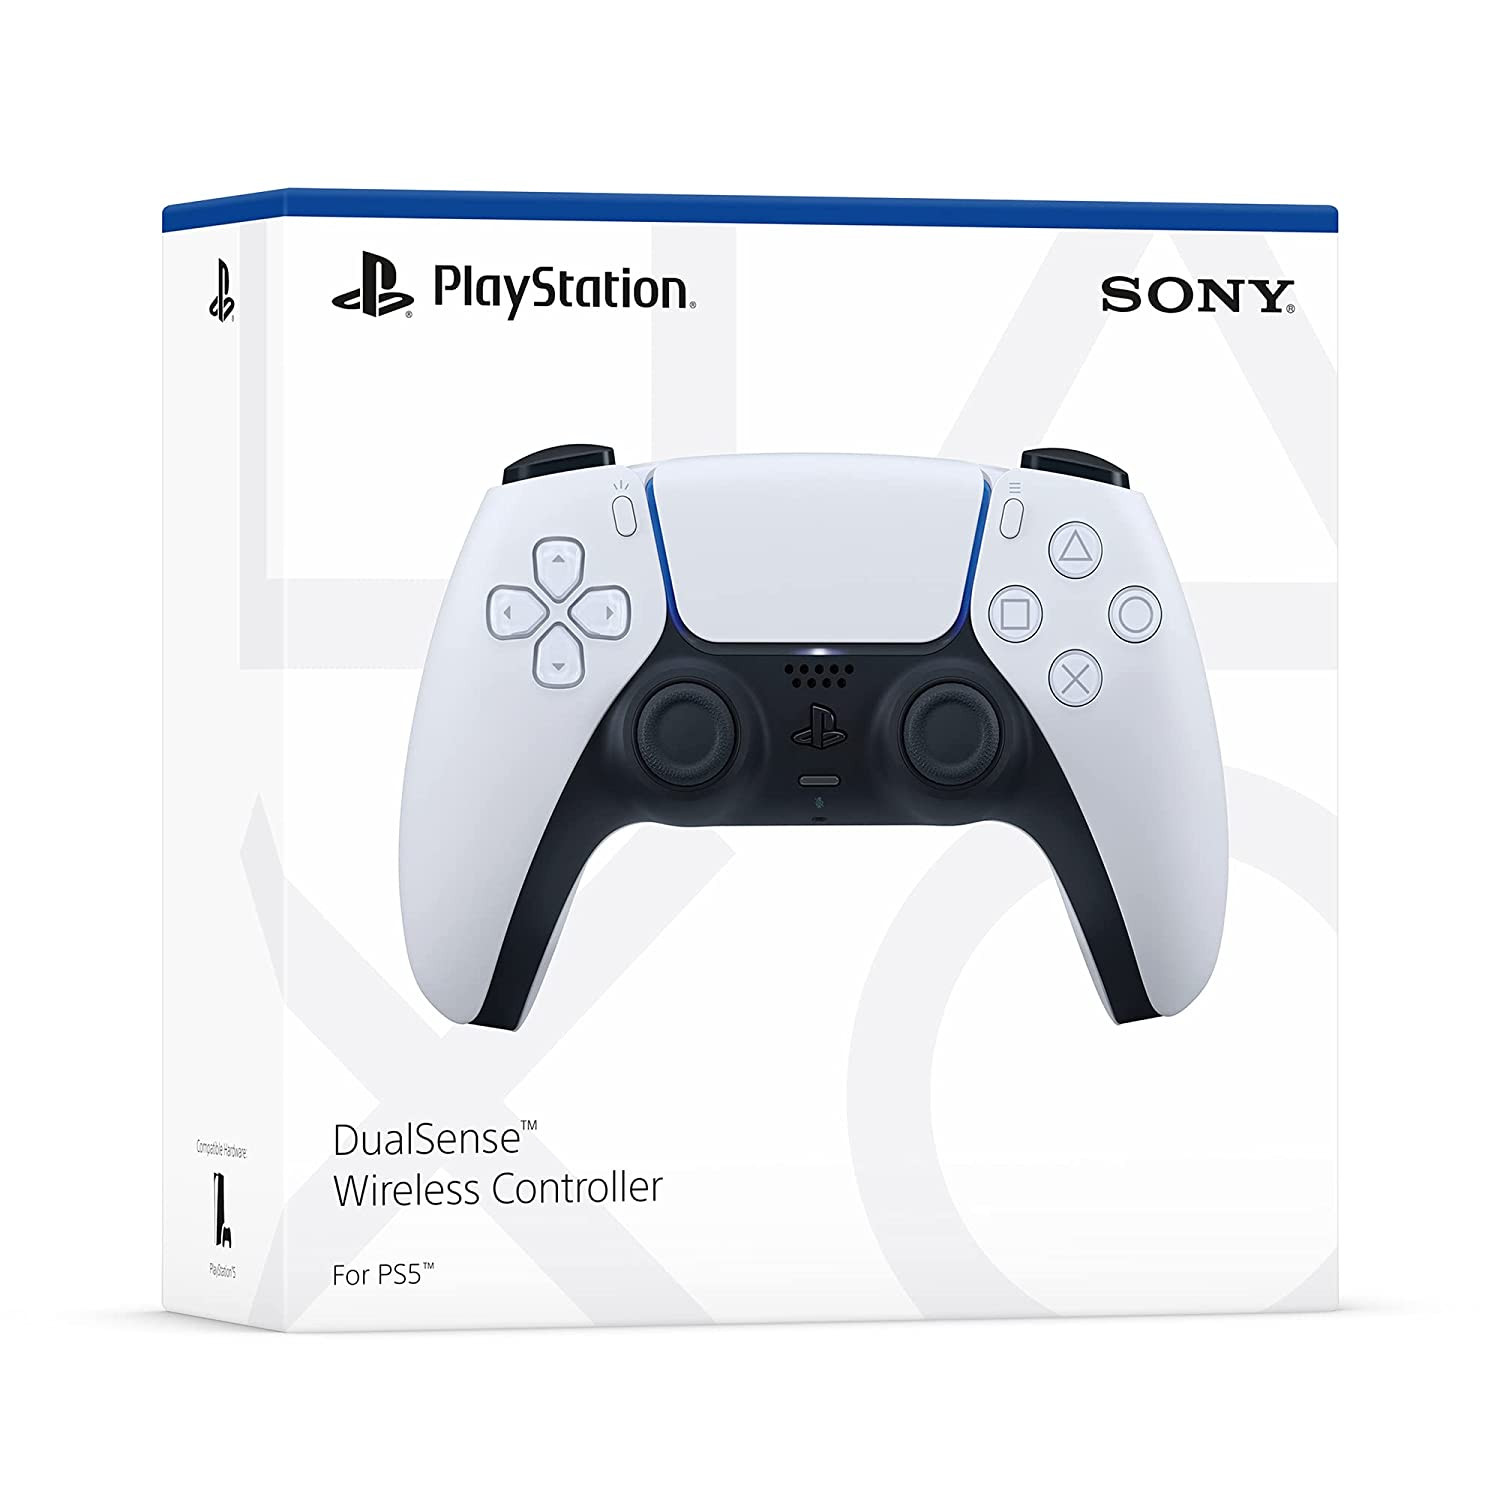 Sony Playstation 5 PS5 DualSense Edge Wireless Controller